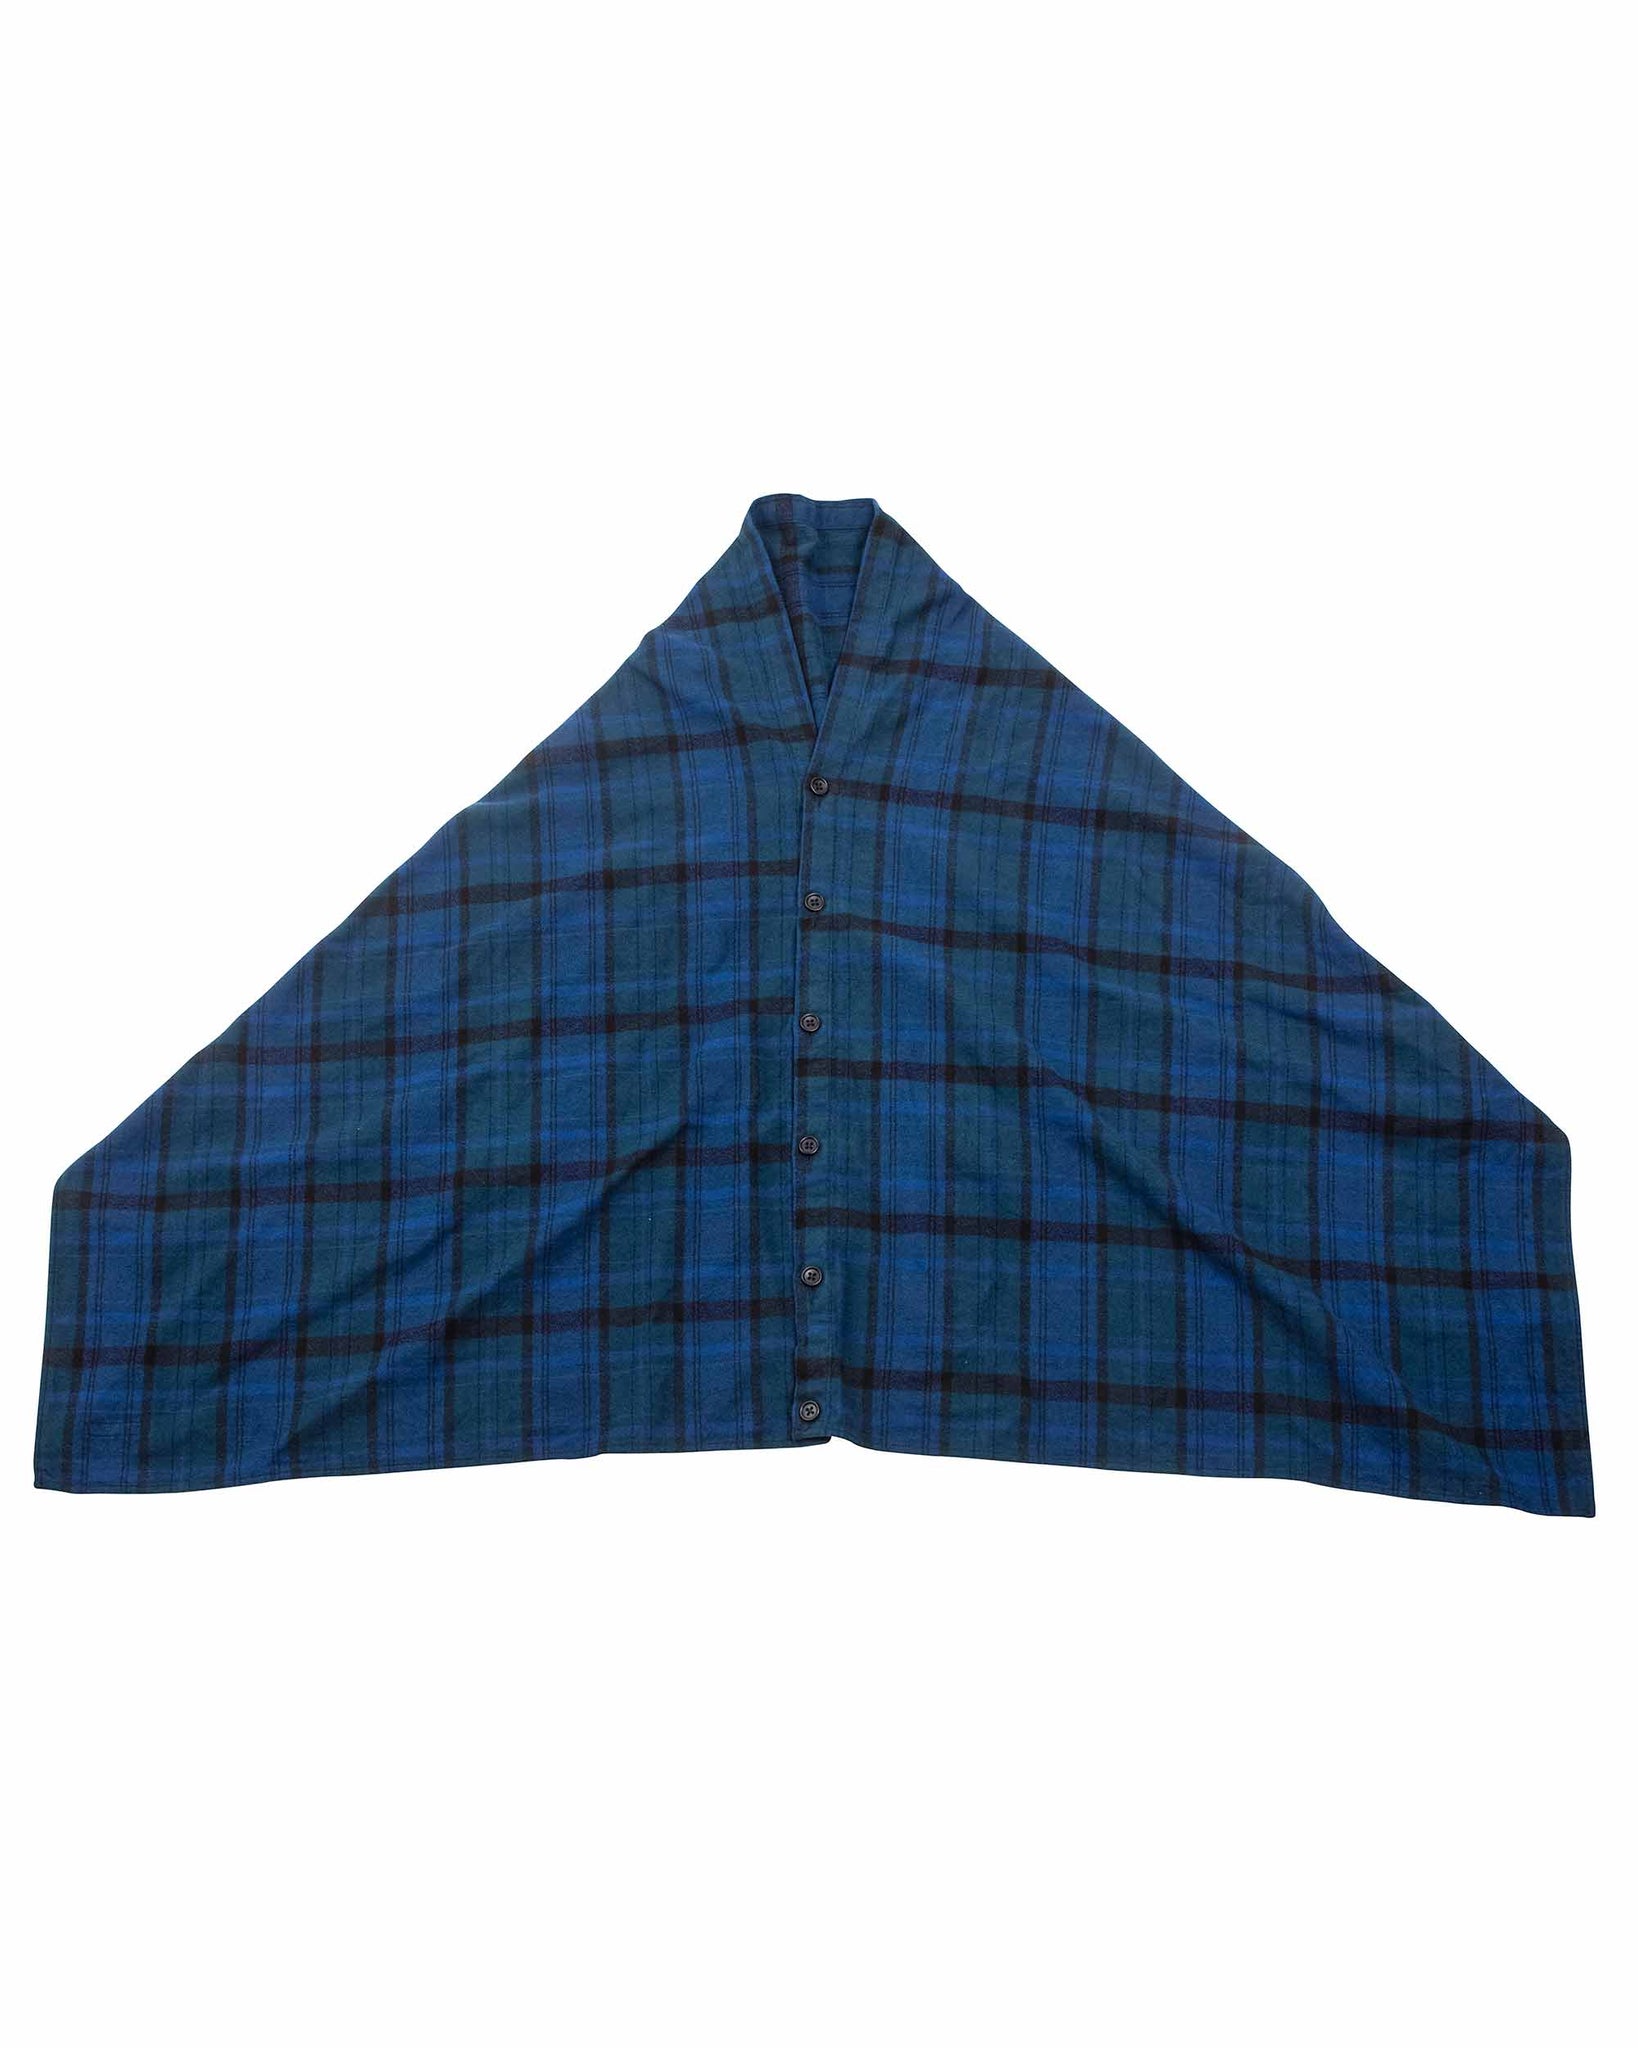 Engineered Garments Button Shawl Navy/Black Plaid Cotton Flannel